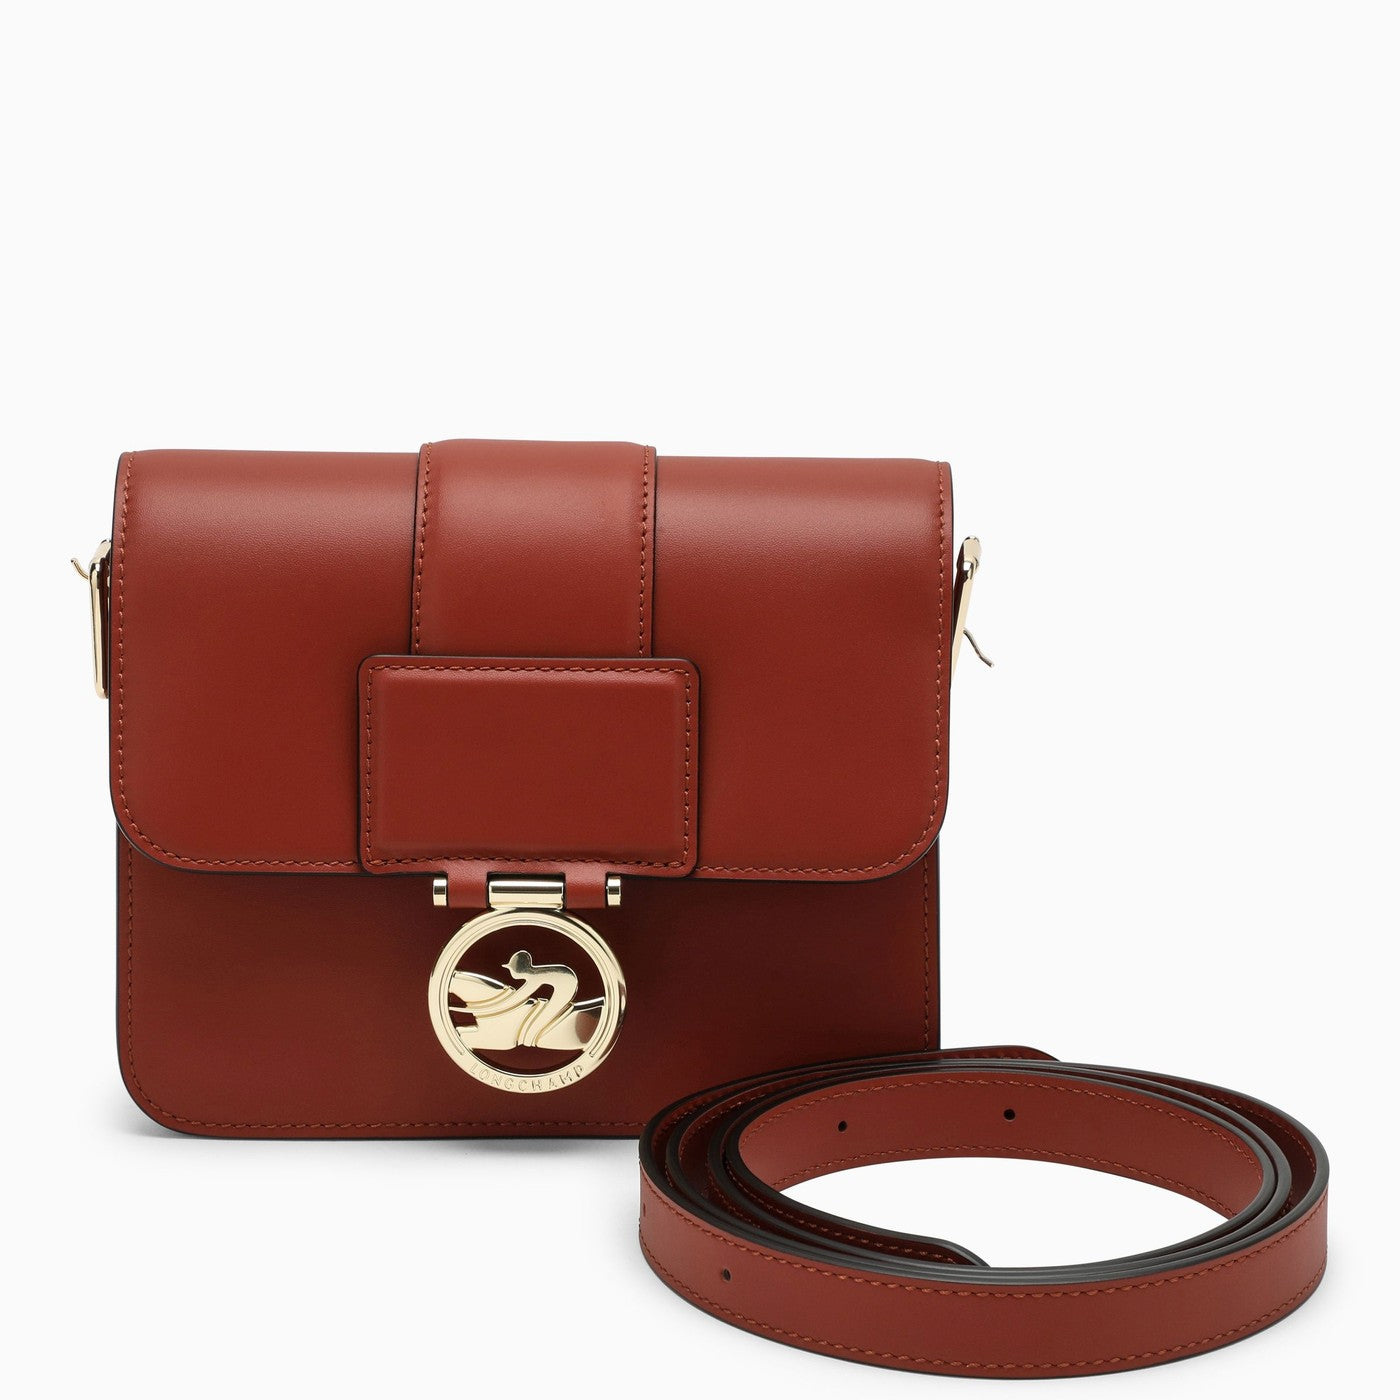 Buy Pauls Boutique London Women's Top-Handle Bag Online at